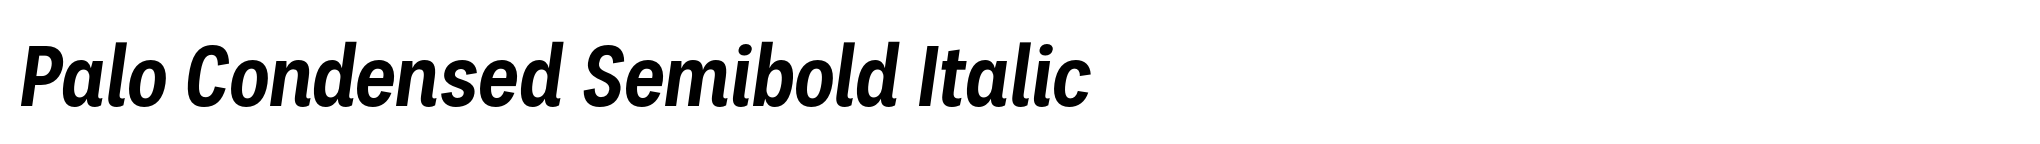 Palo Condensed Semibold Italic image